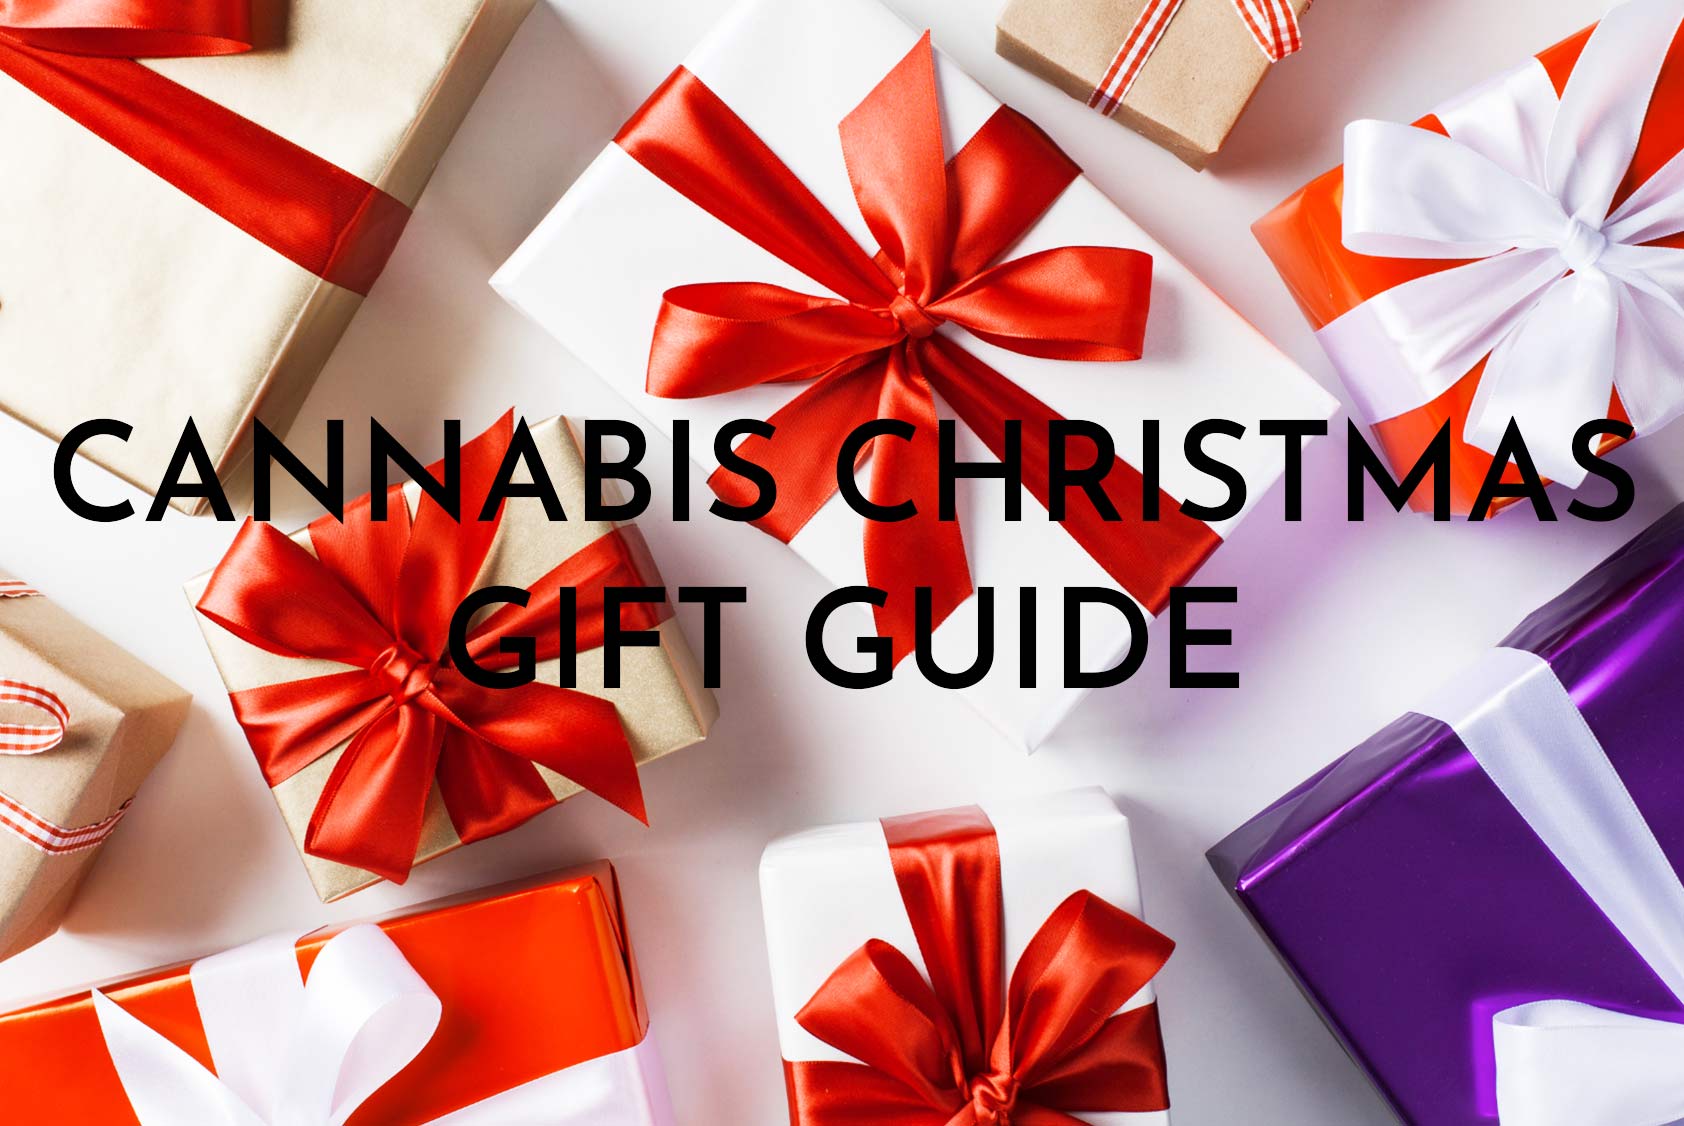 Puffland Cannabis Christmas gift guide